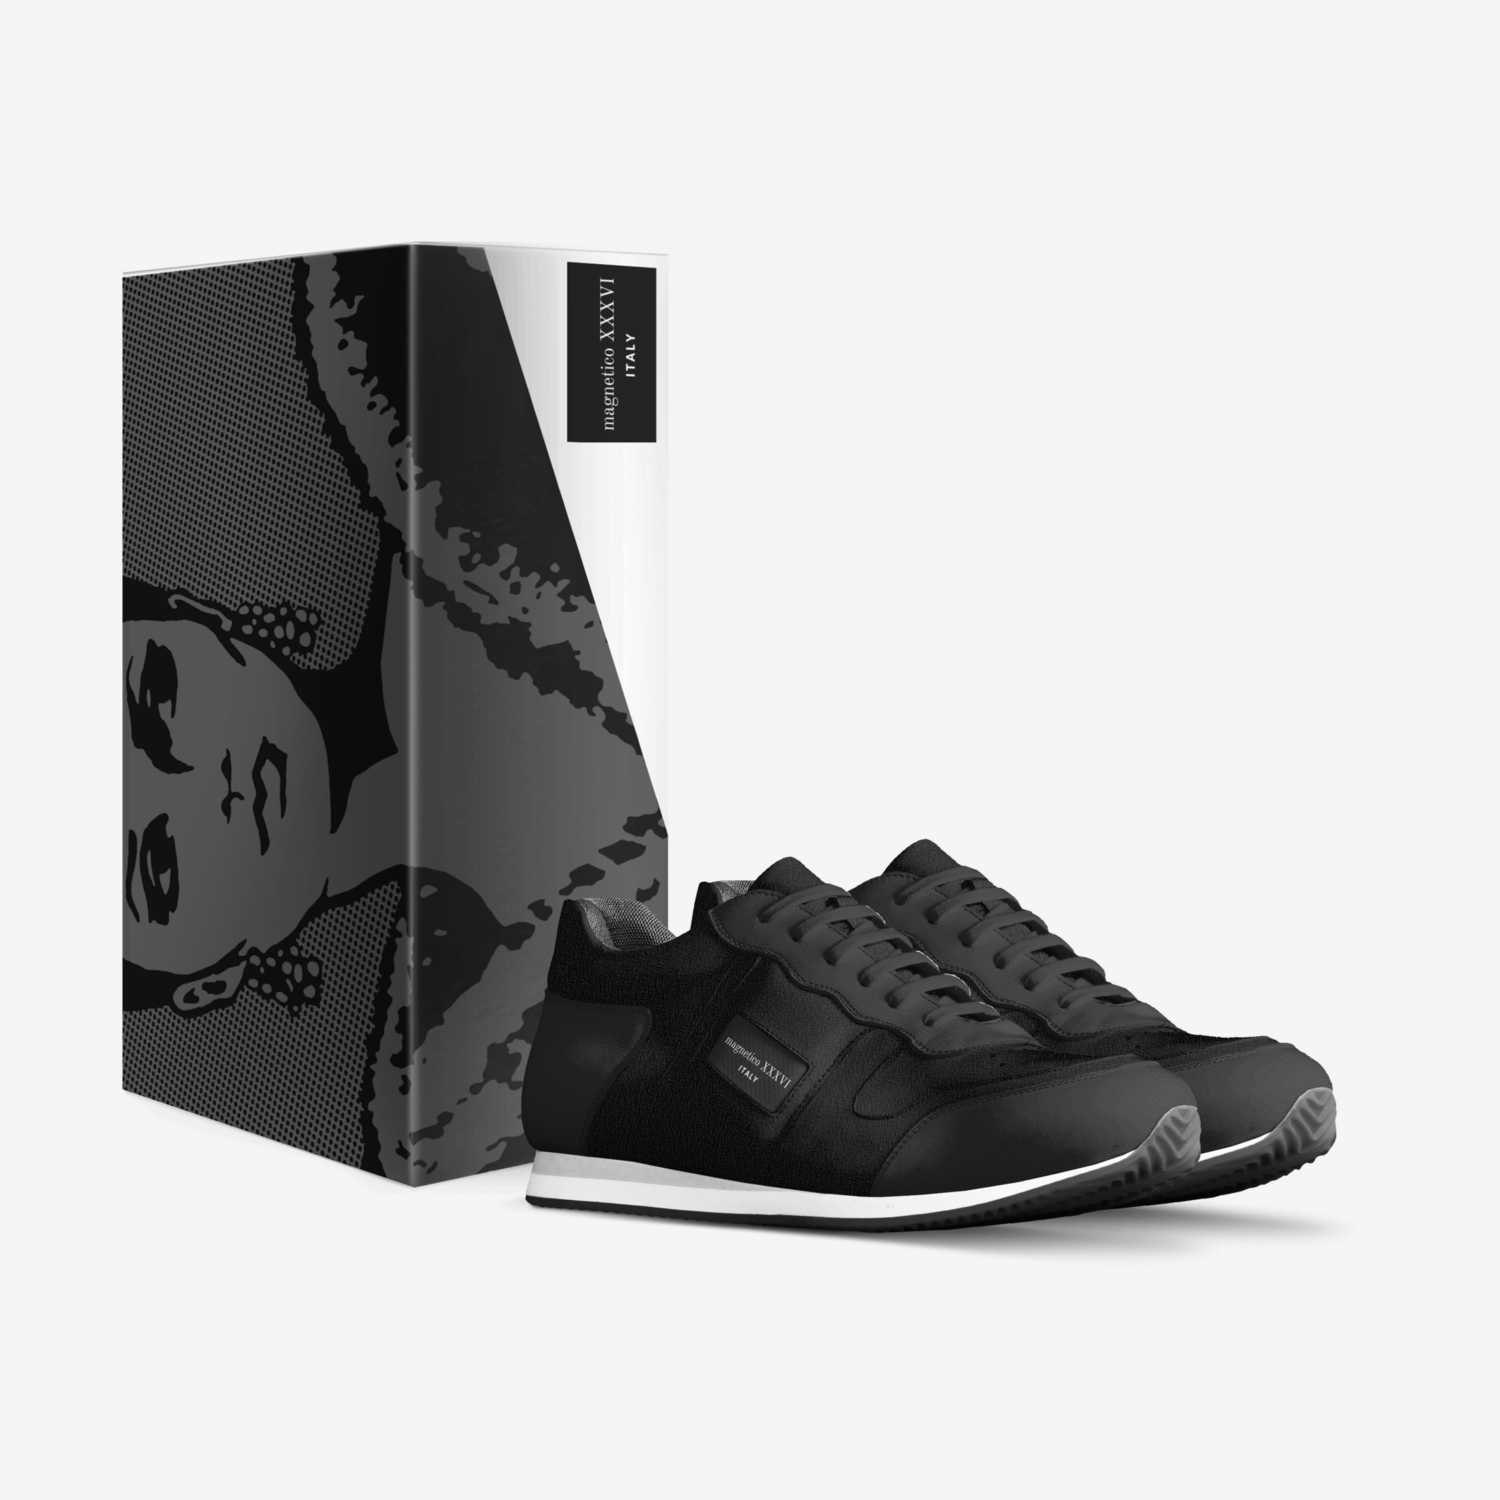 magnetico XXXVI EB custom made in Italy shoes by Jesús Sandoval | Box view